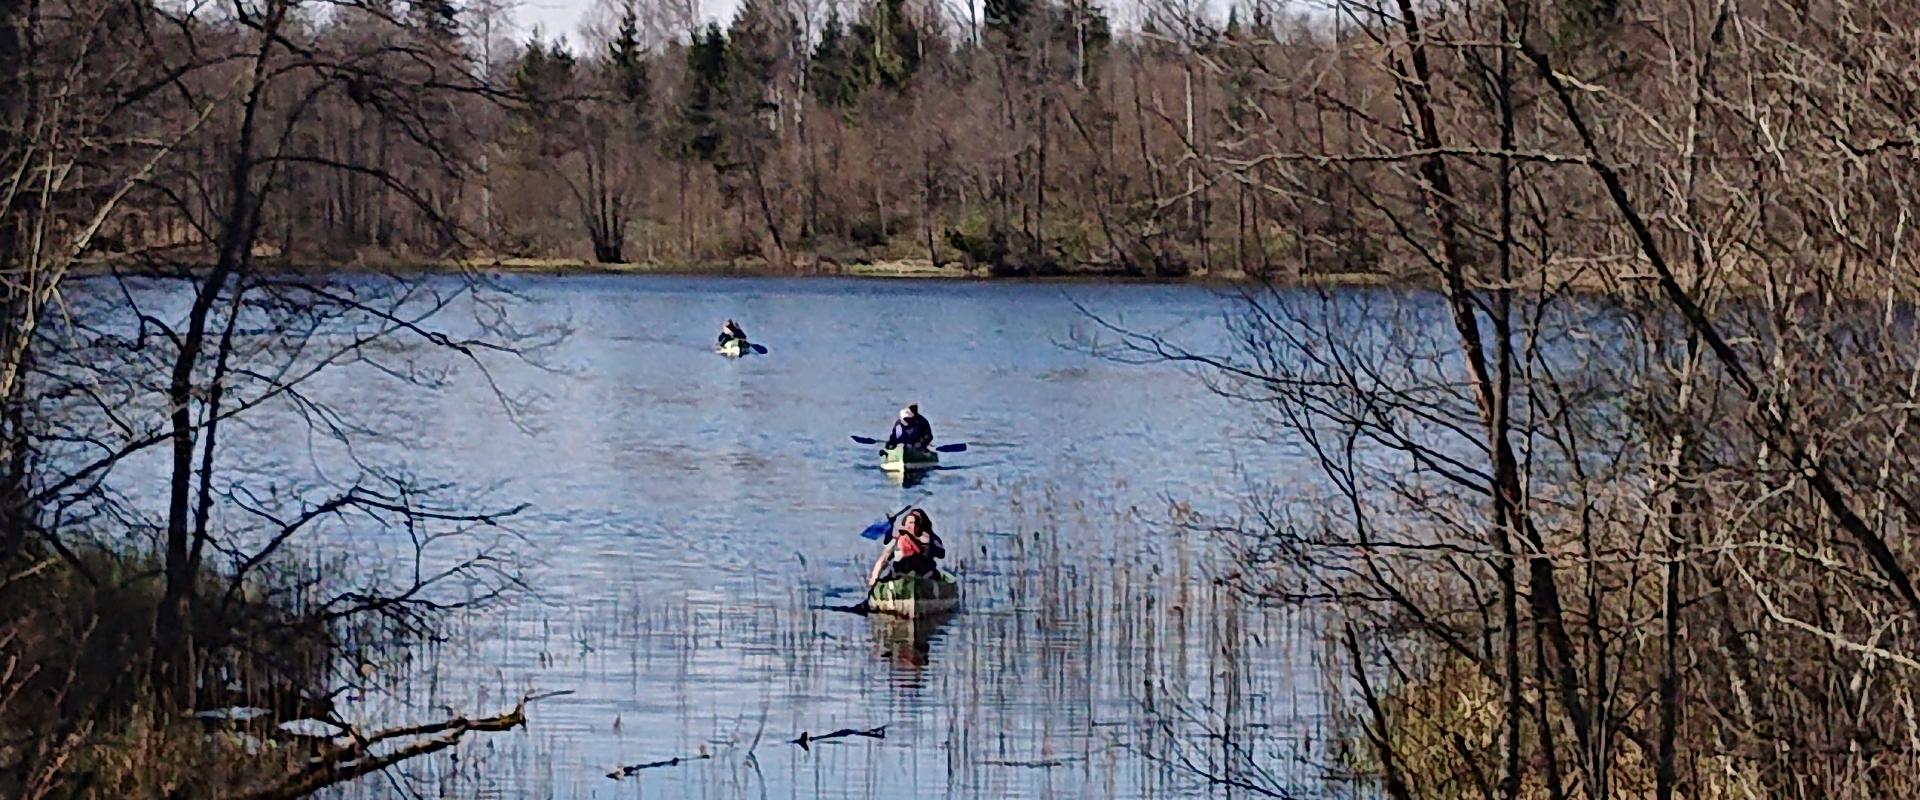 Canoeing on the Kooraste lakes